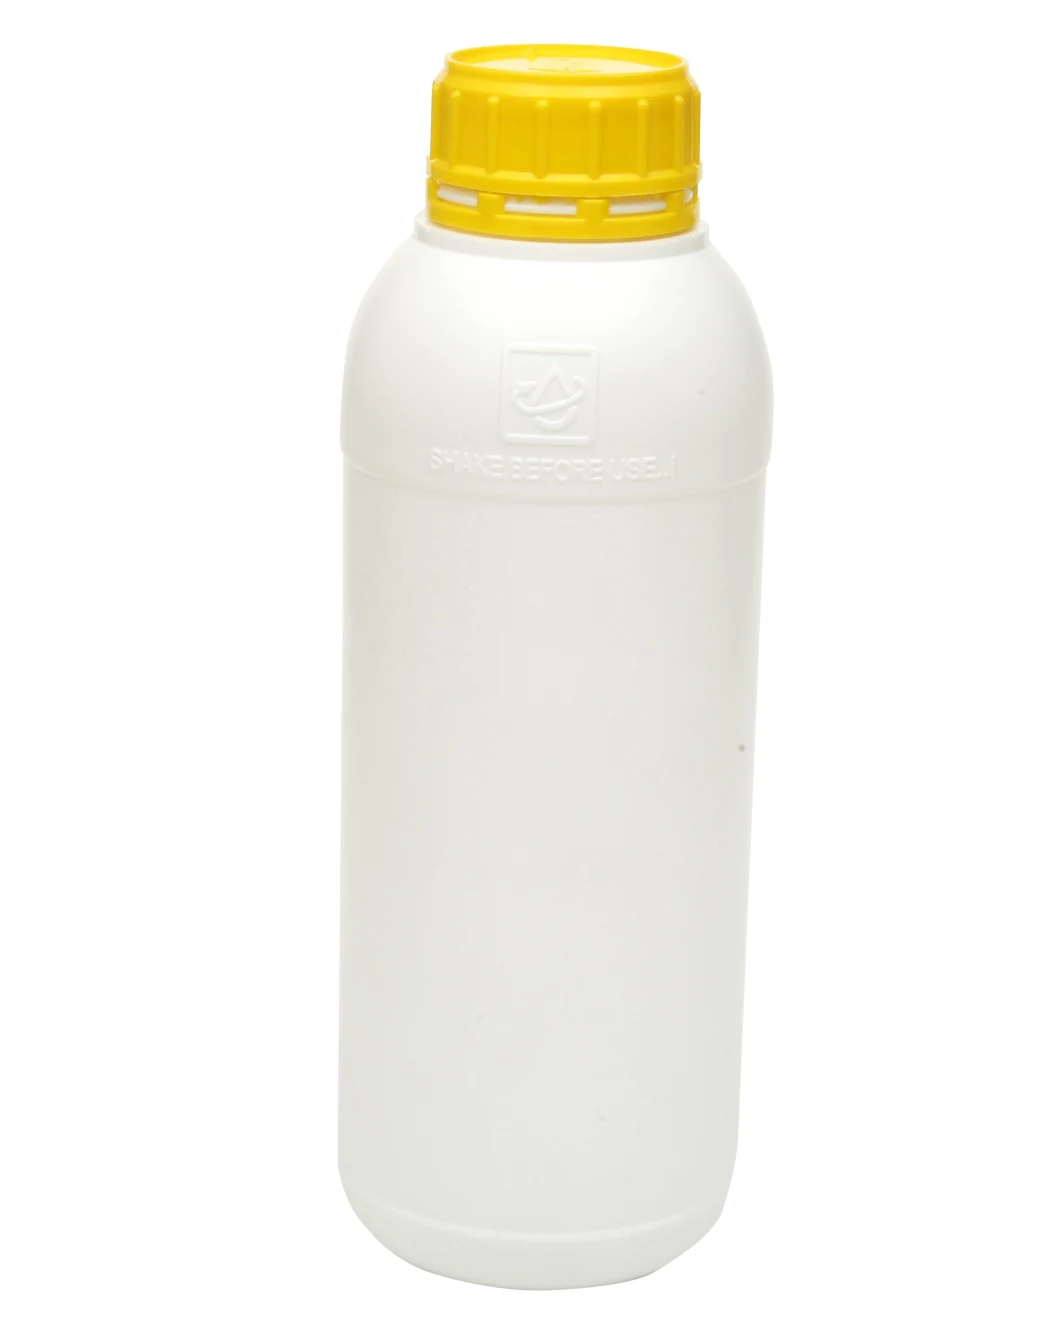 HDPE Double Neck Bottle Twin Neck Bottle Pesticide Agricultural Chemicals Plastic Bottle